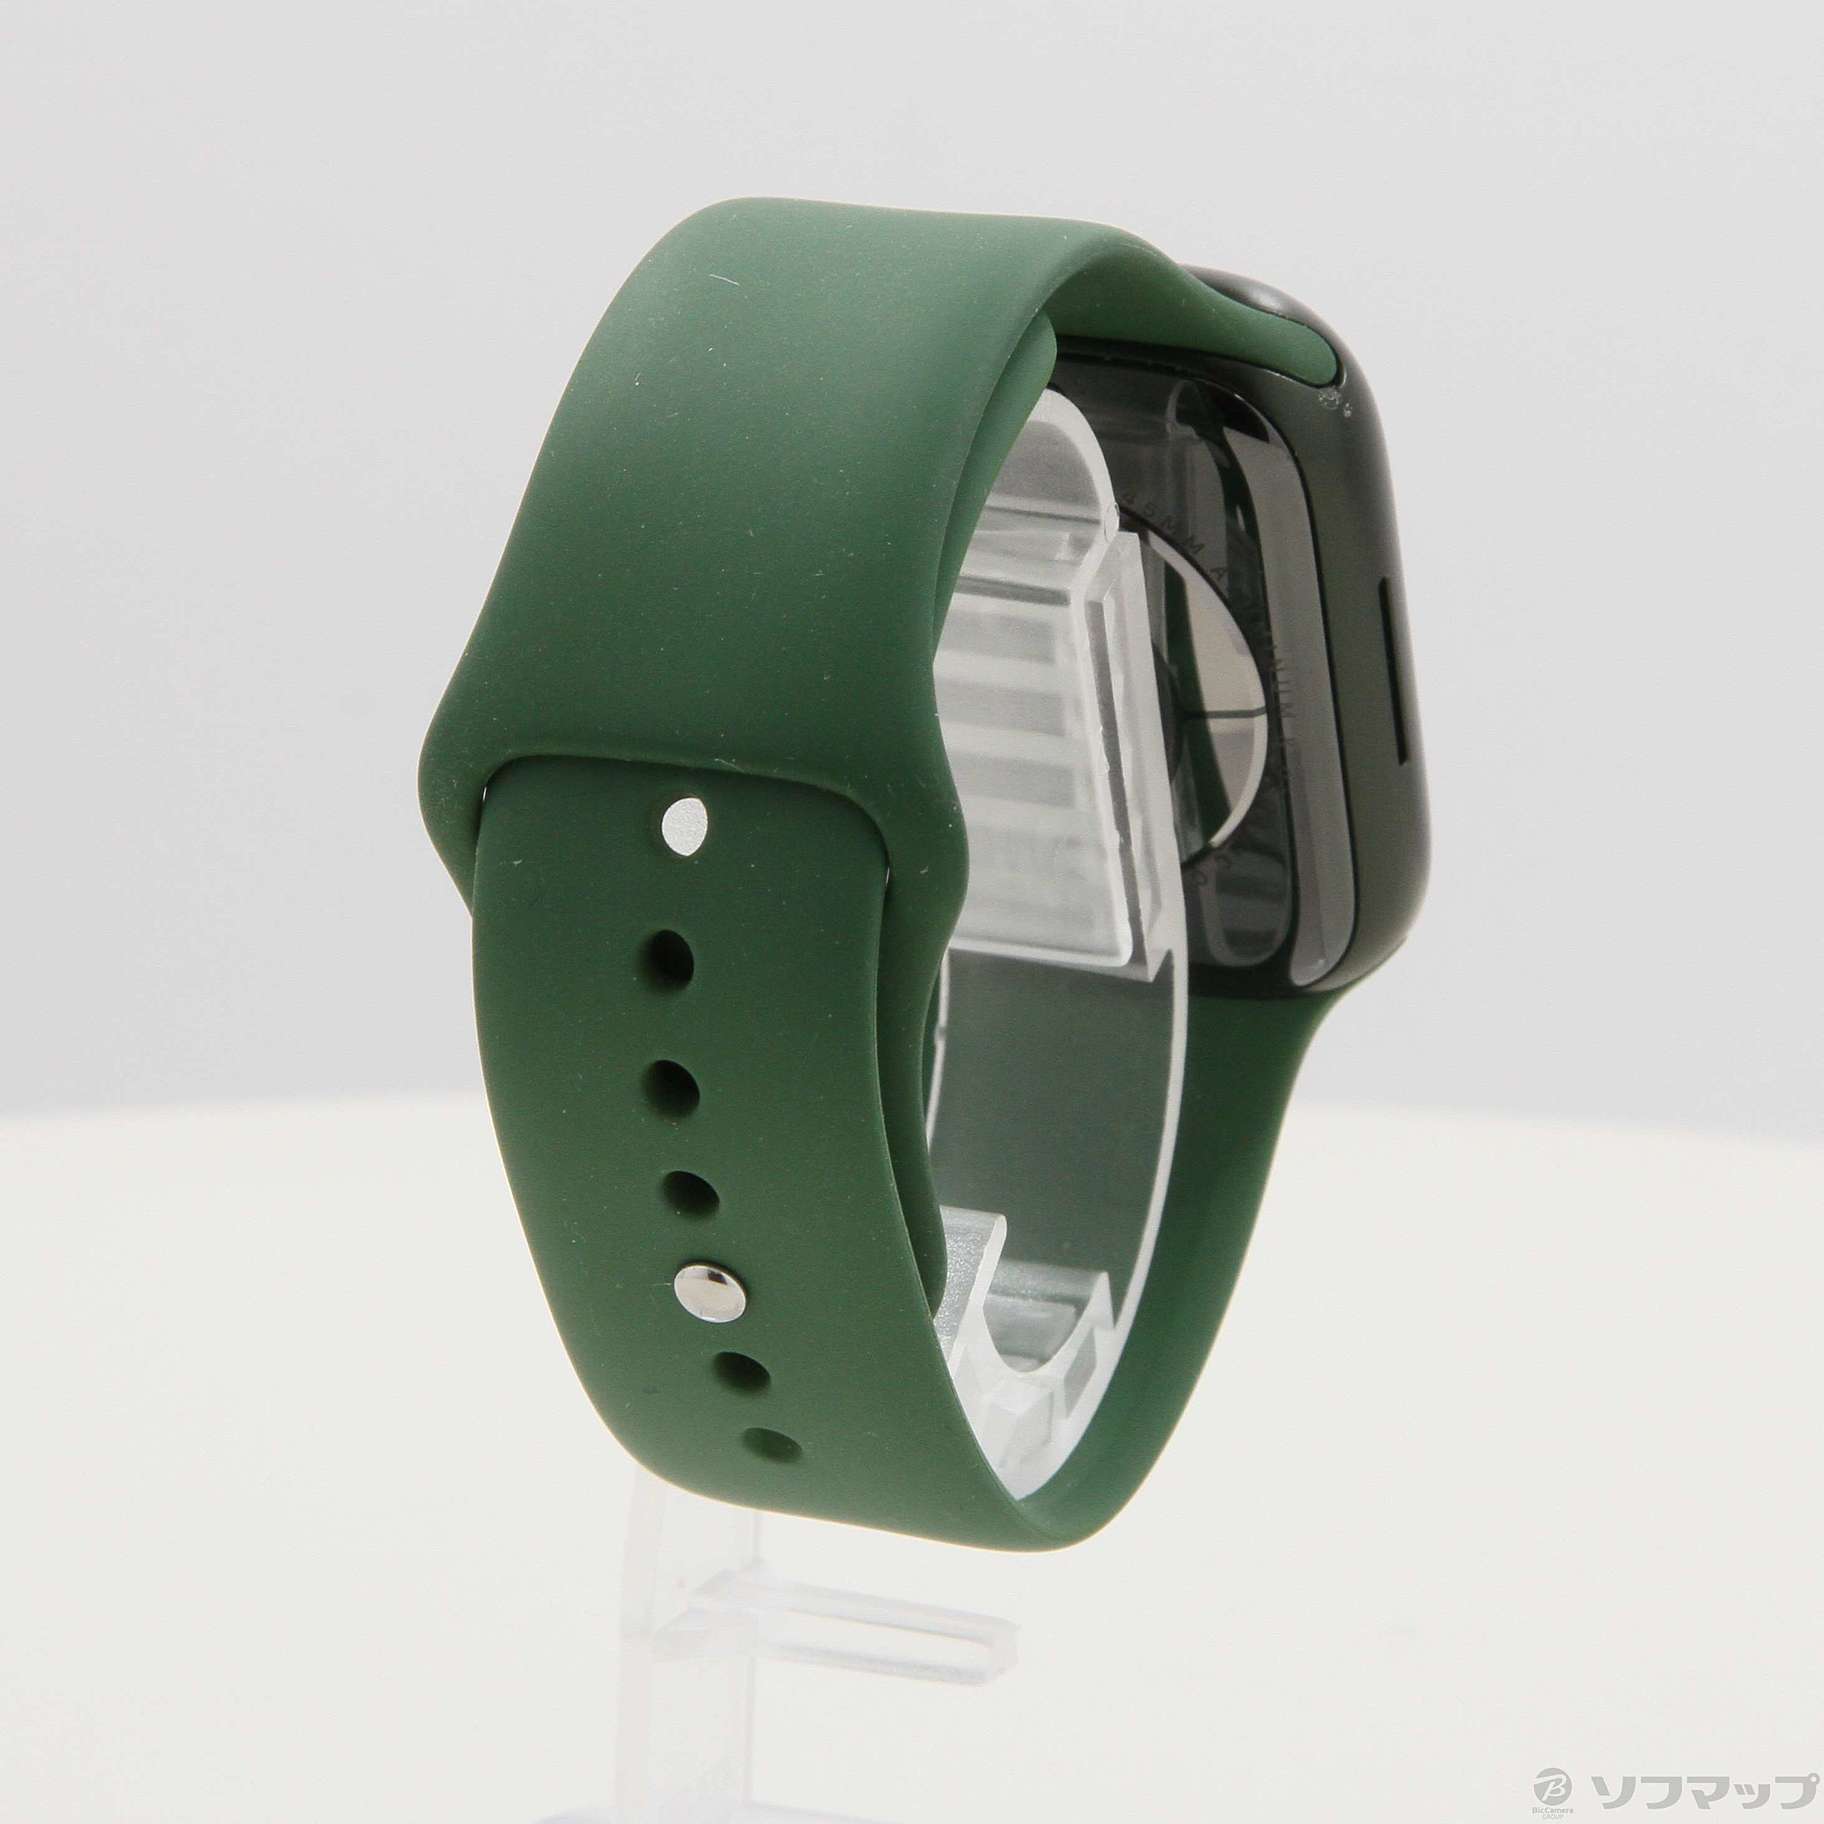 Applewatch series7 グリーンアルミニウムケース45mm - その他